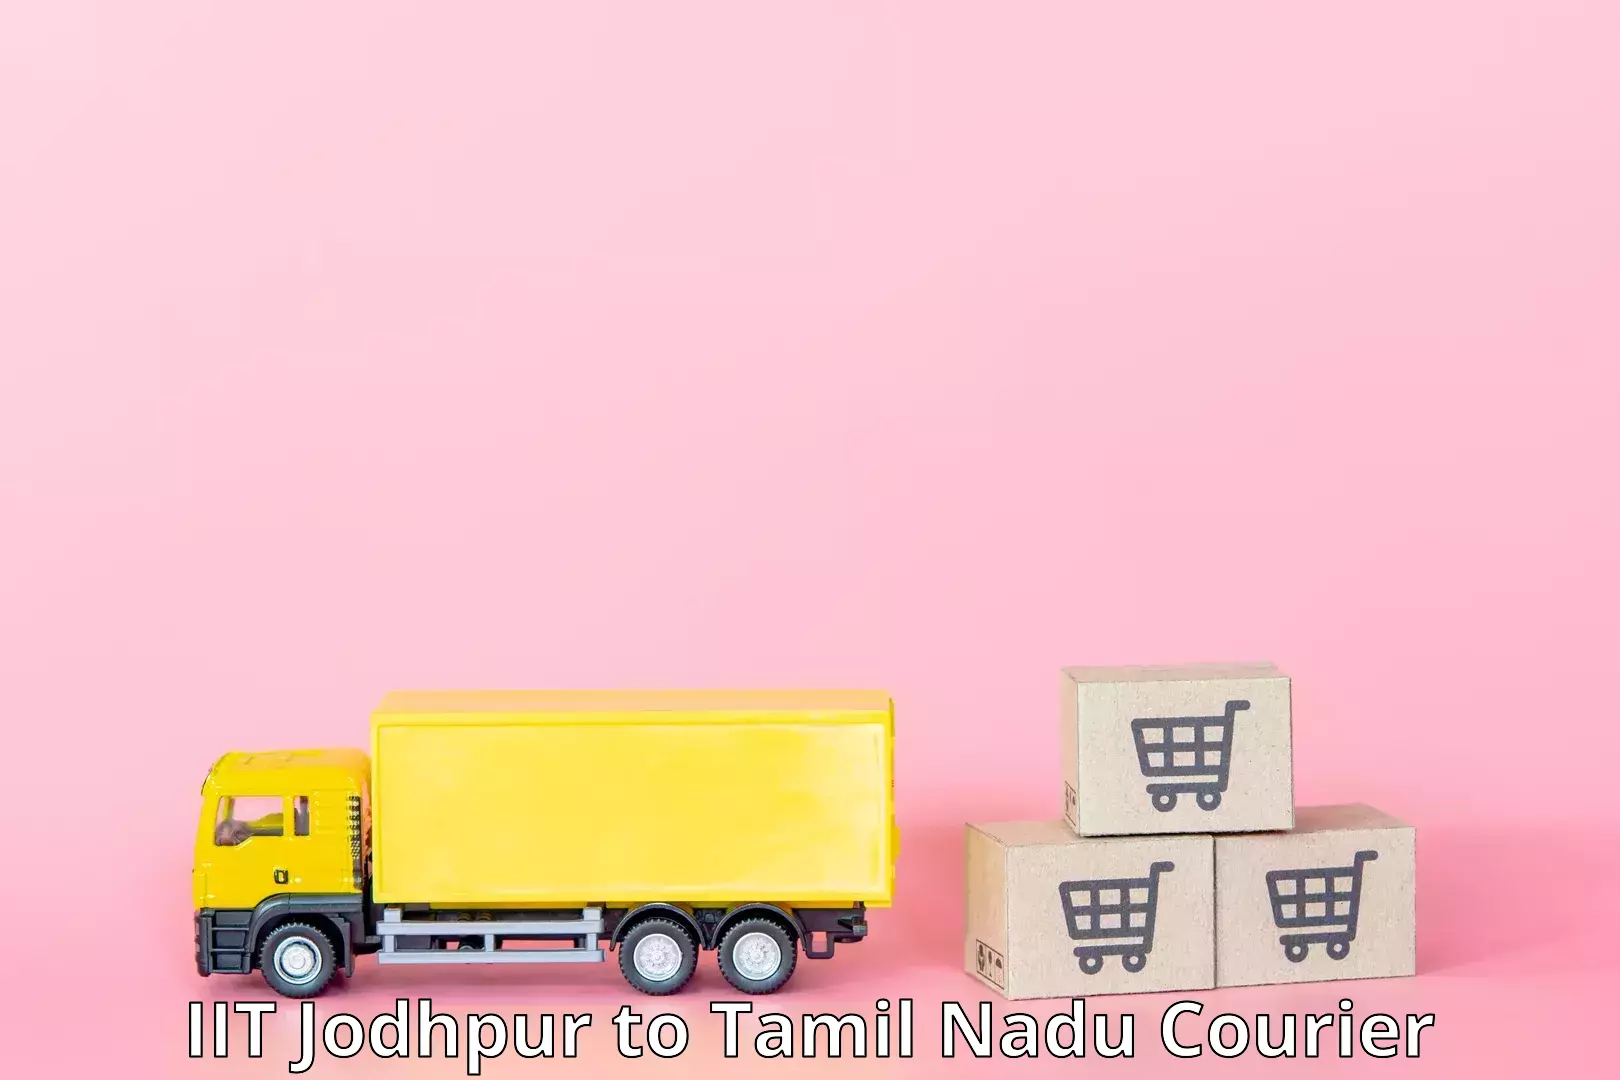 Courier service partnerships IIT Jodhpur to Aranthangi